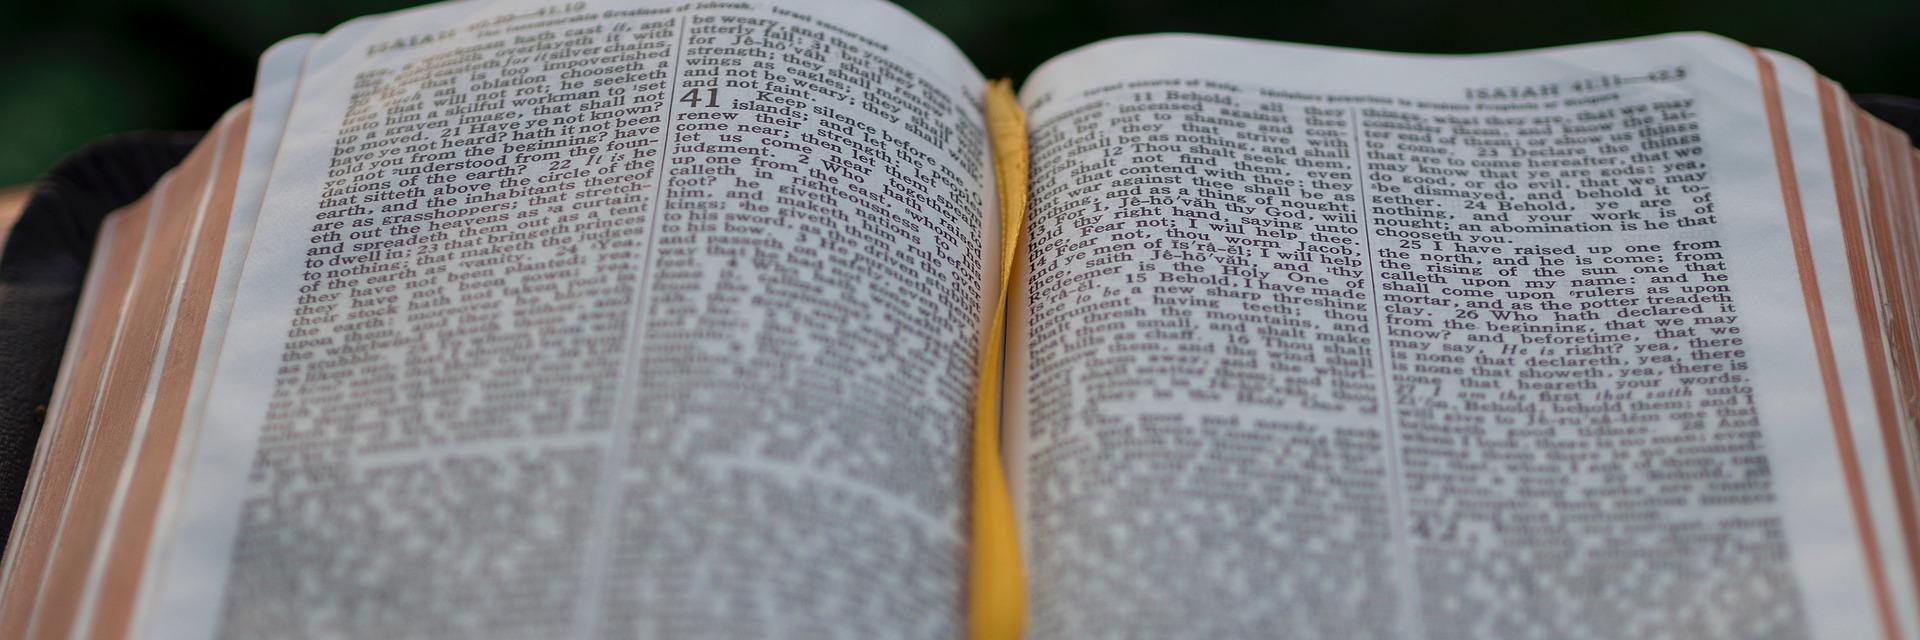 Bibel (c) pixabay.com